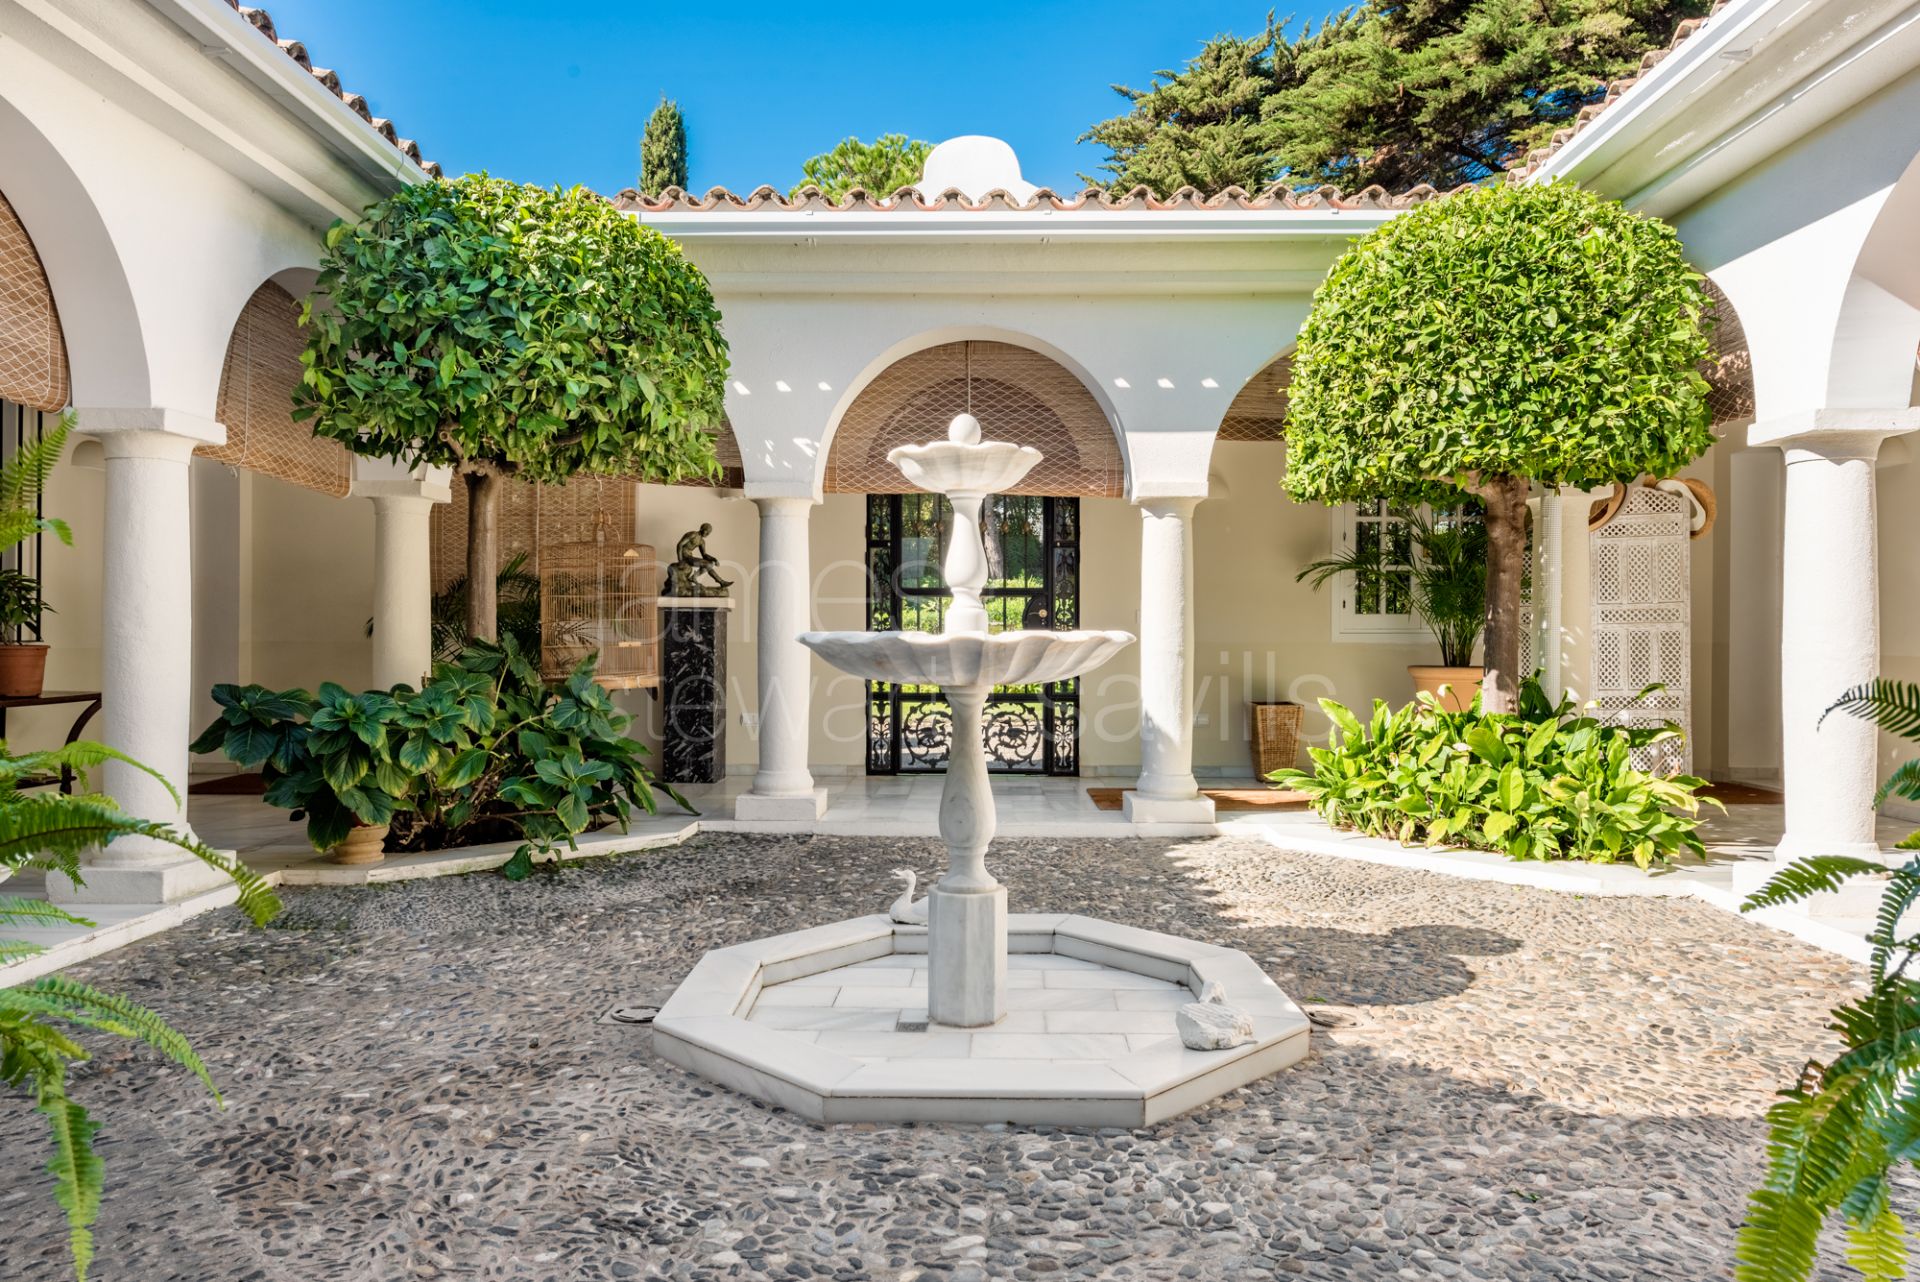 Beautiful classic cortijo style villa with immense charm